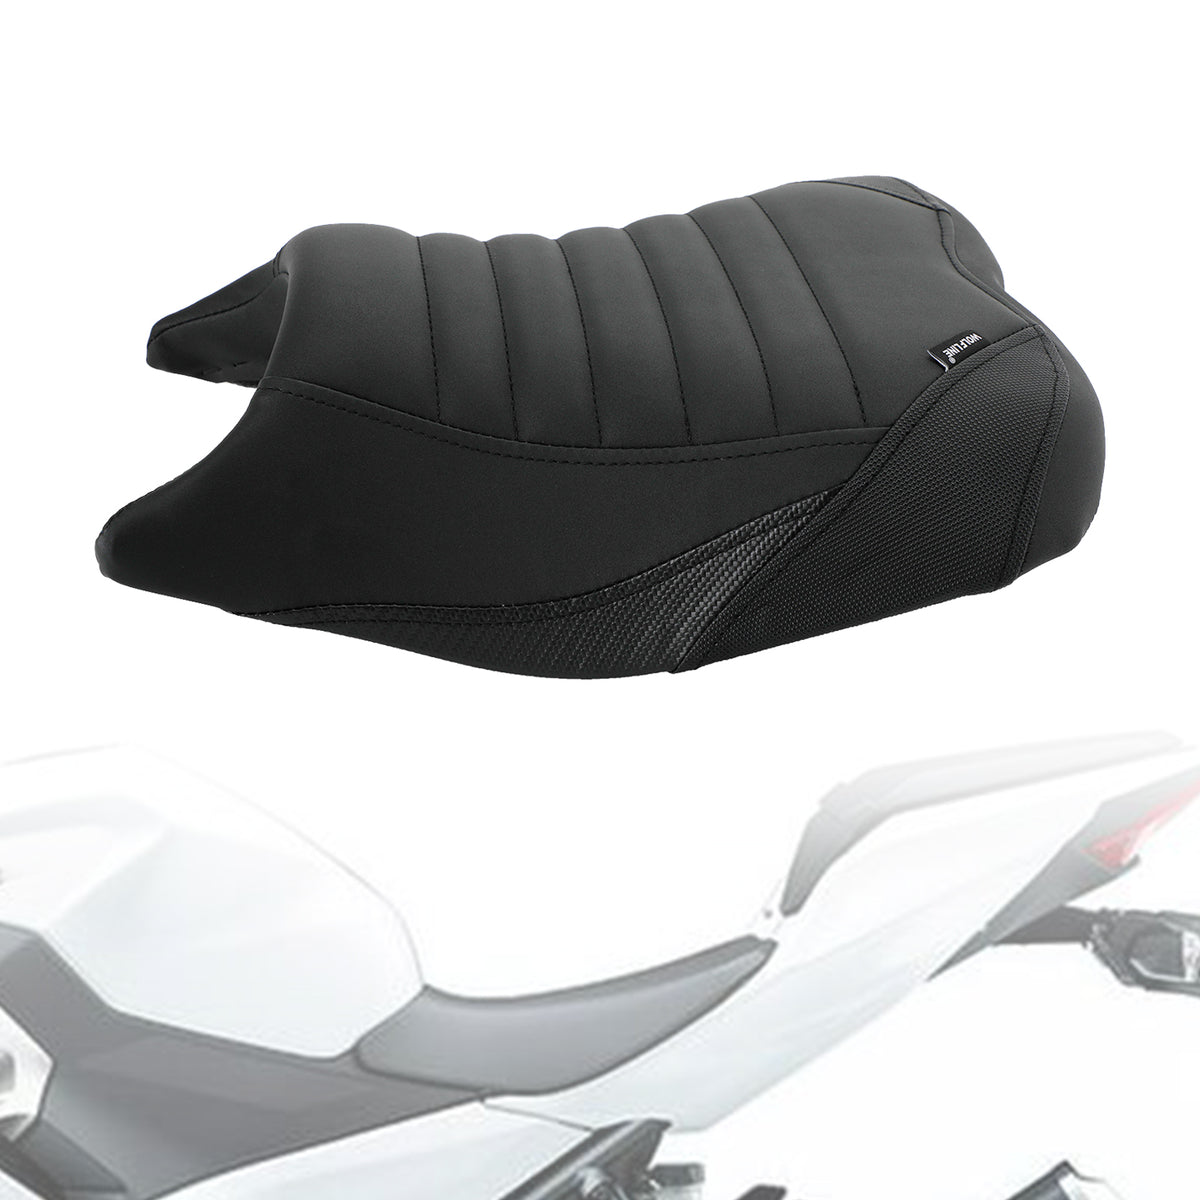 Complete Cushion Rider Passenger Seat Fits For Kawasaki Ninja 400 Z400 18-22 Green